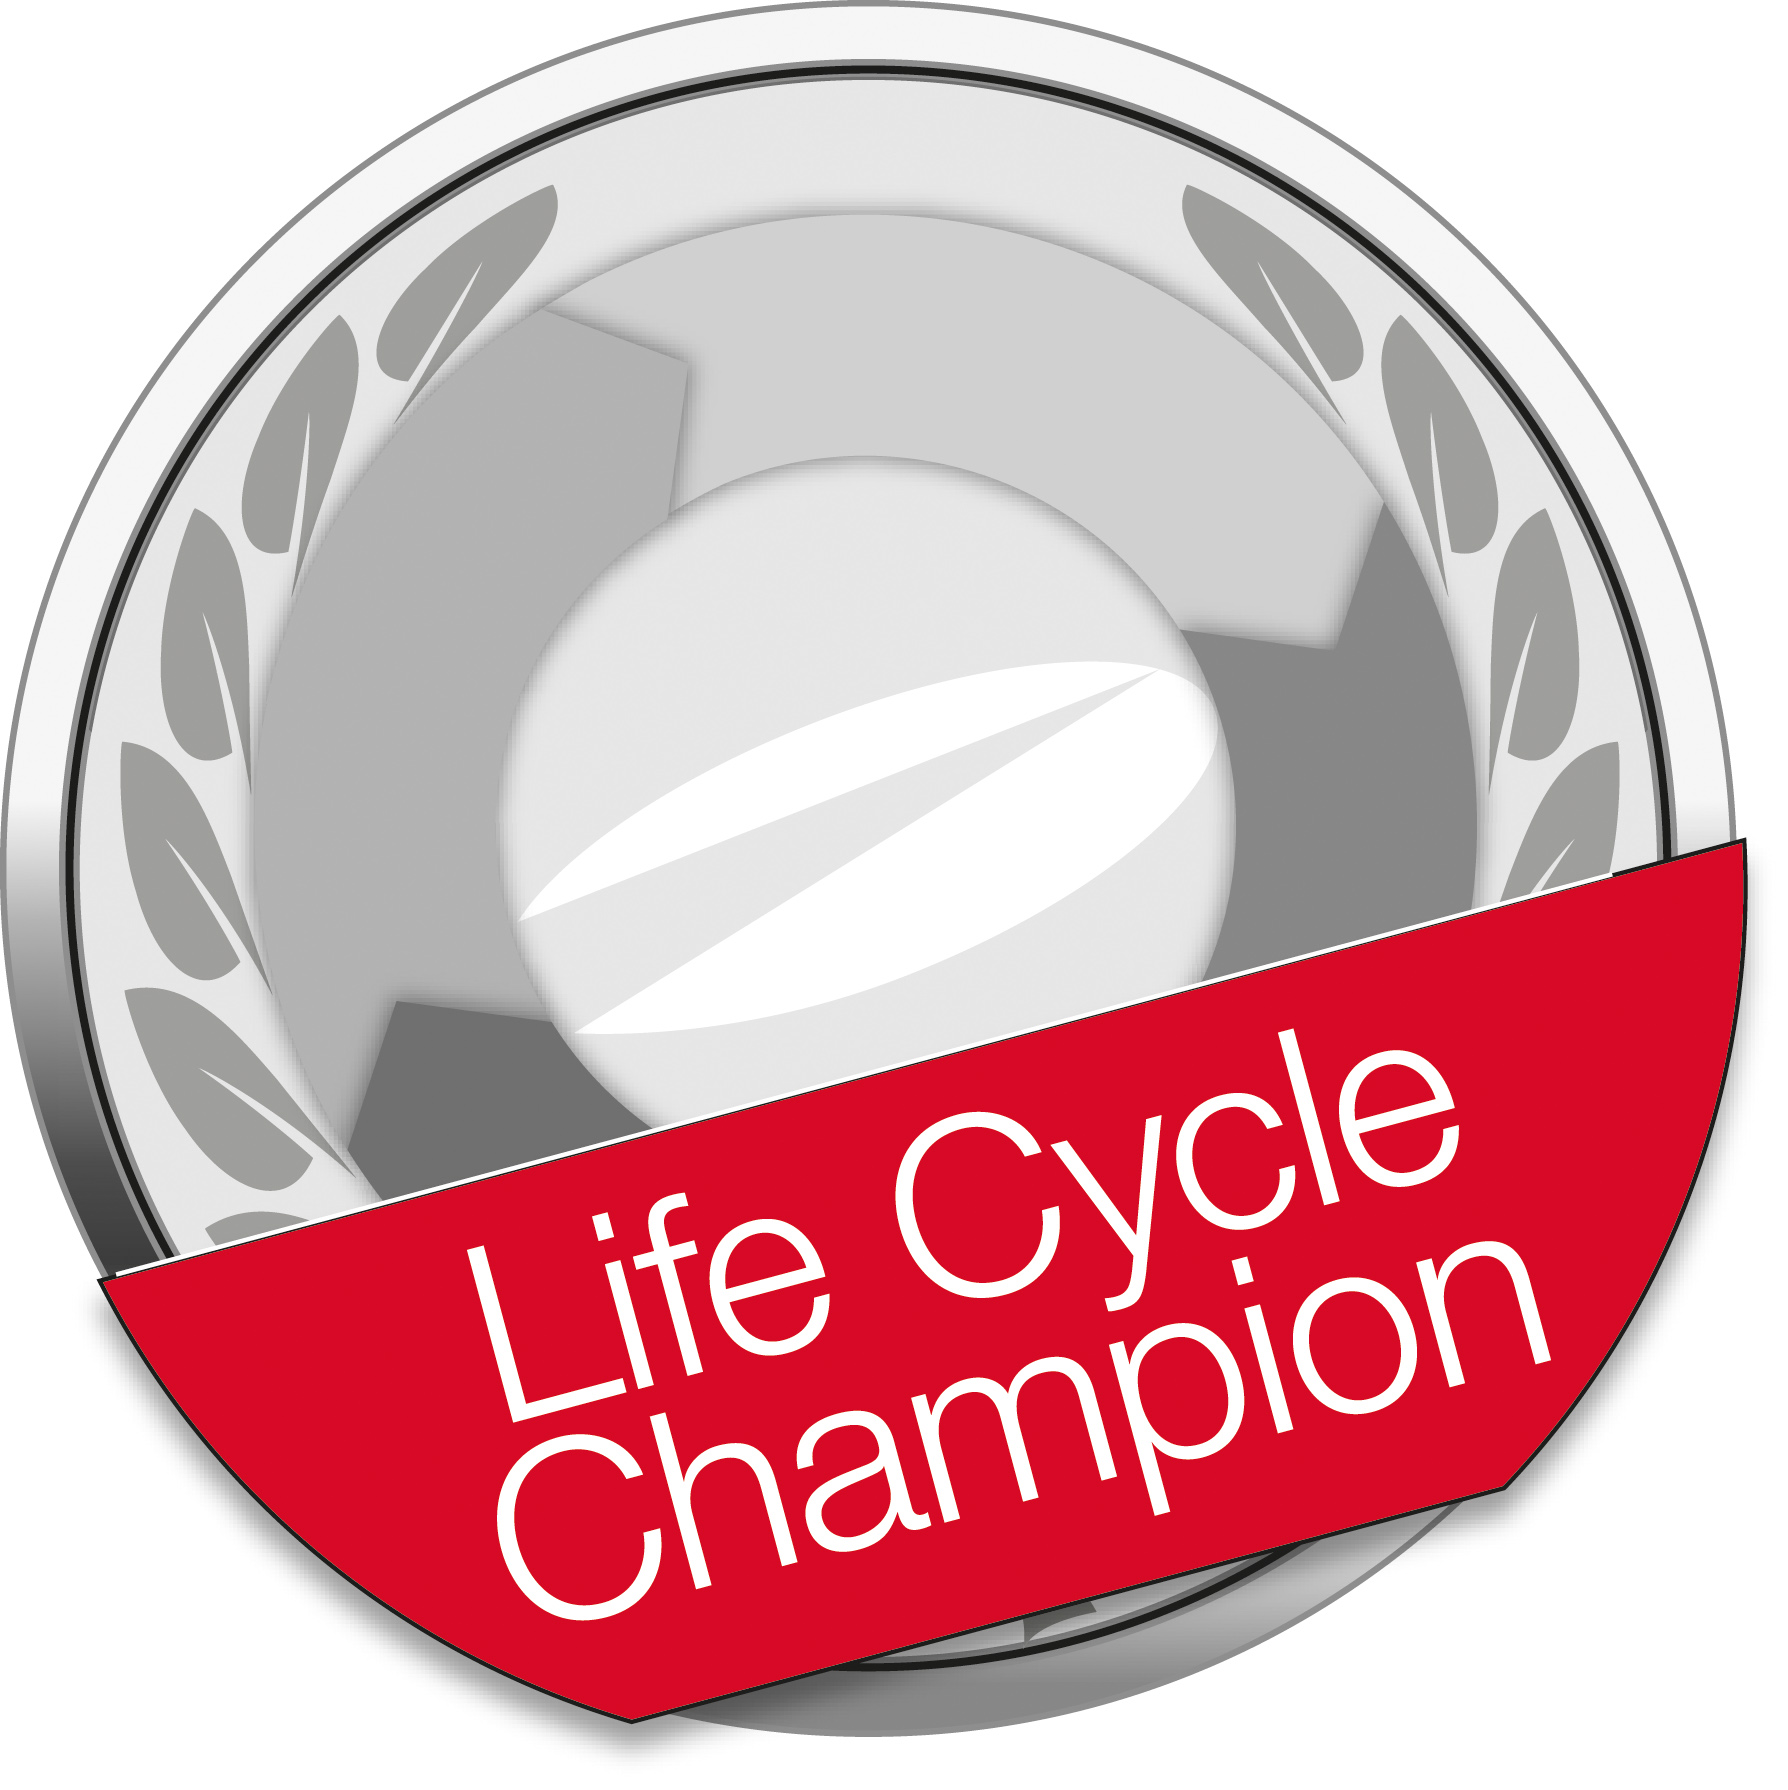 Life cycle champion icon